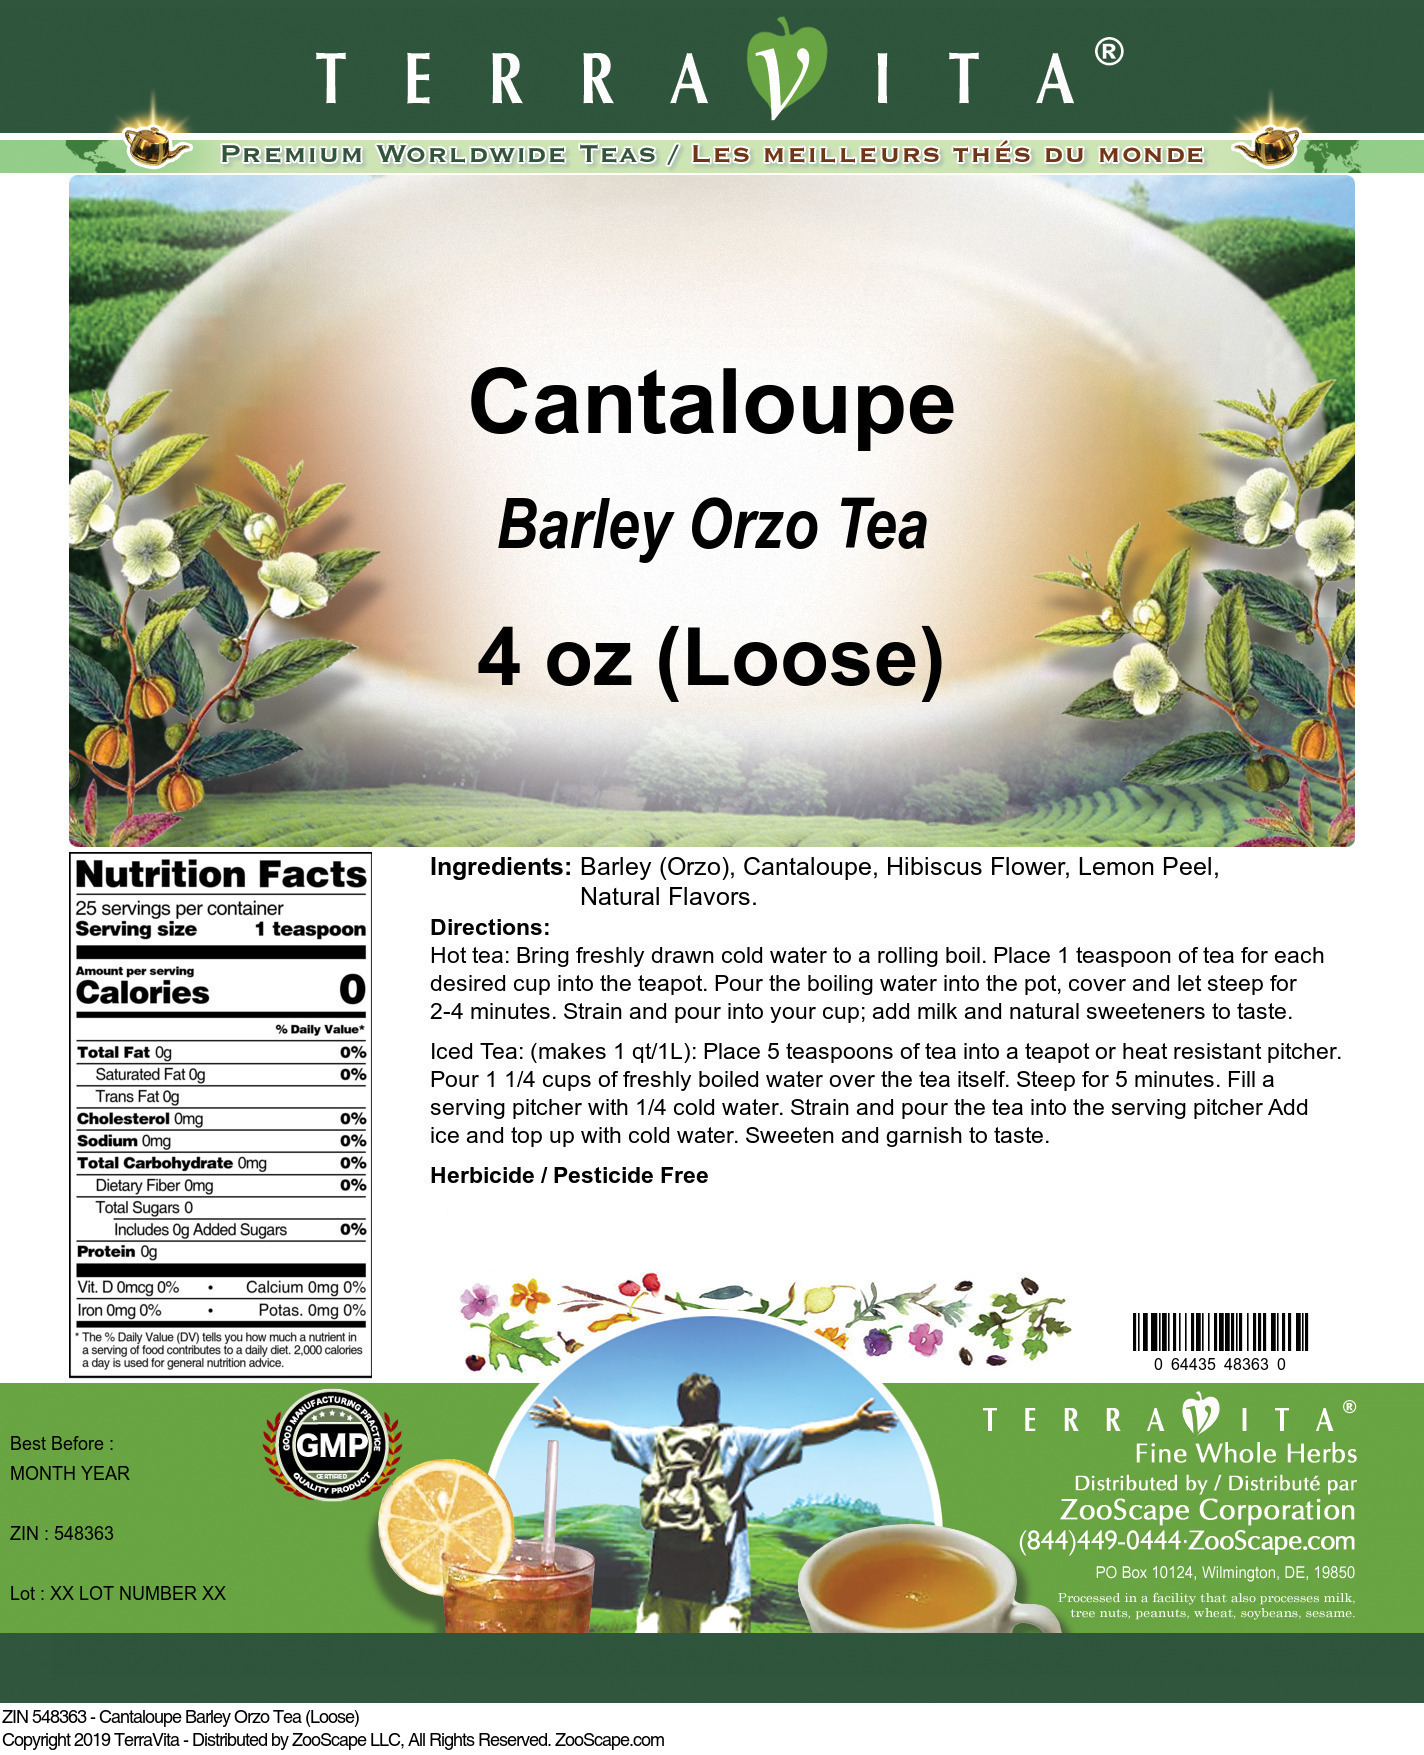 Cantaloupe Barley Orzo Tea (Loose) - Label